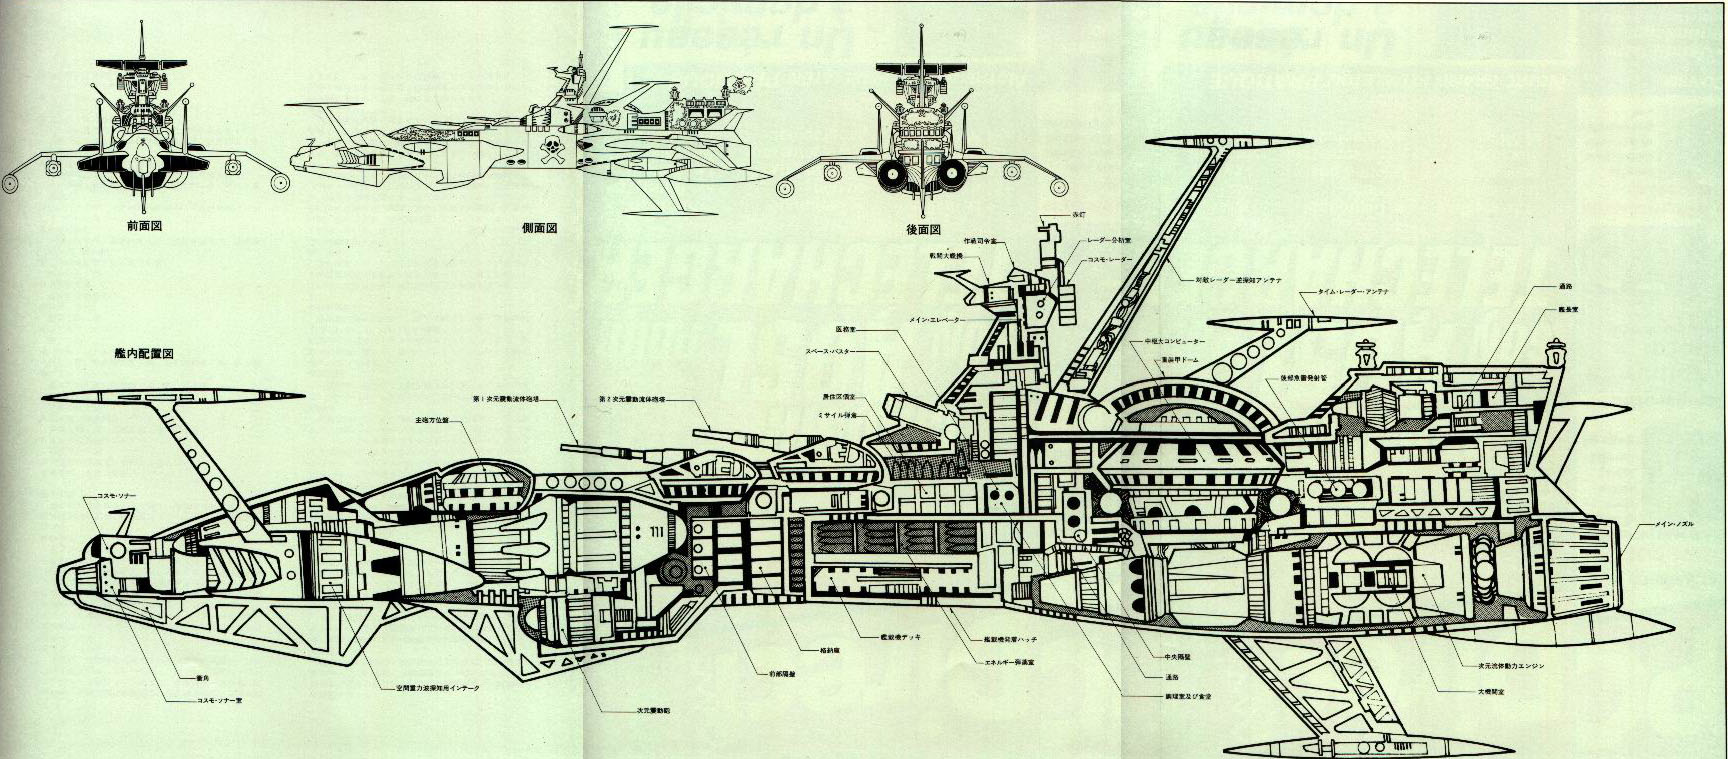 Atlantis – Arcadia (Albator – Harlock)